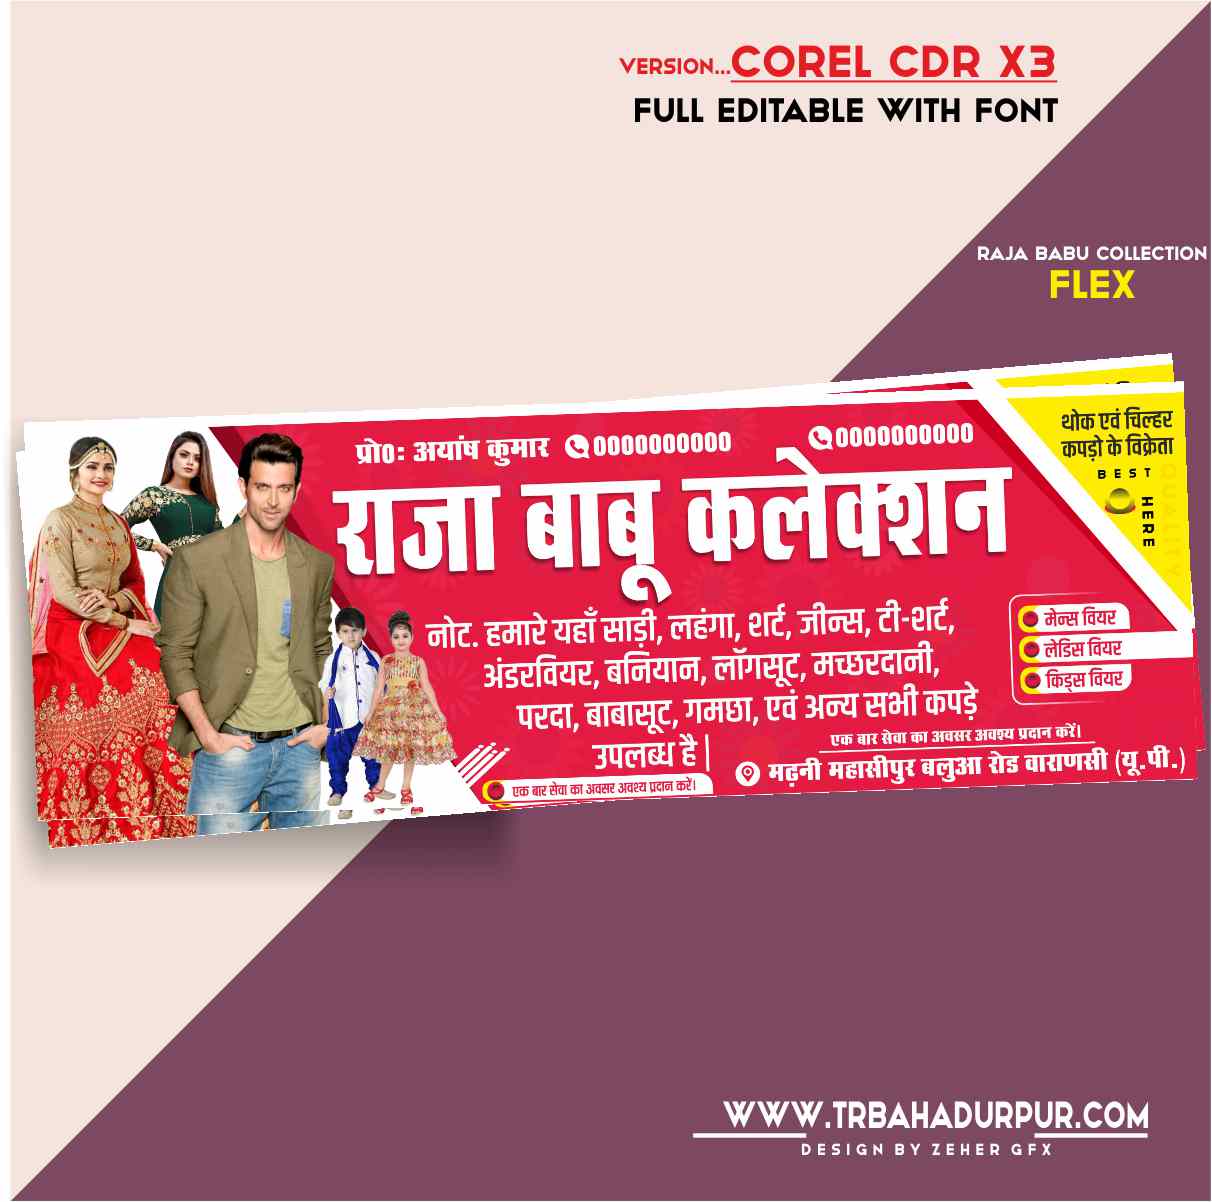 Raja Babu Collection (Cloth) Shop Banner Design Cdr File – TR BAHADURPUR